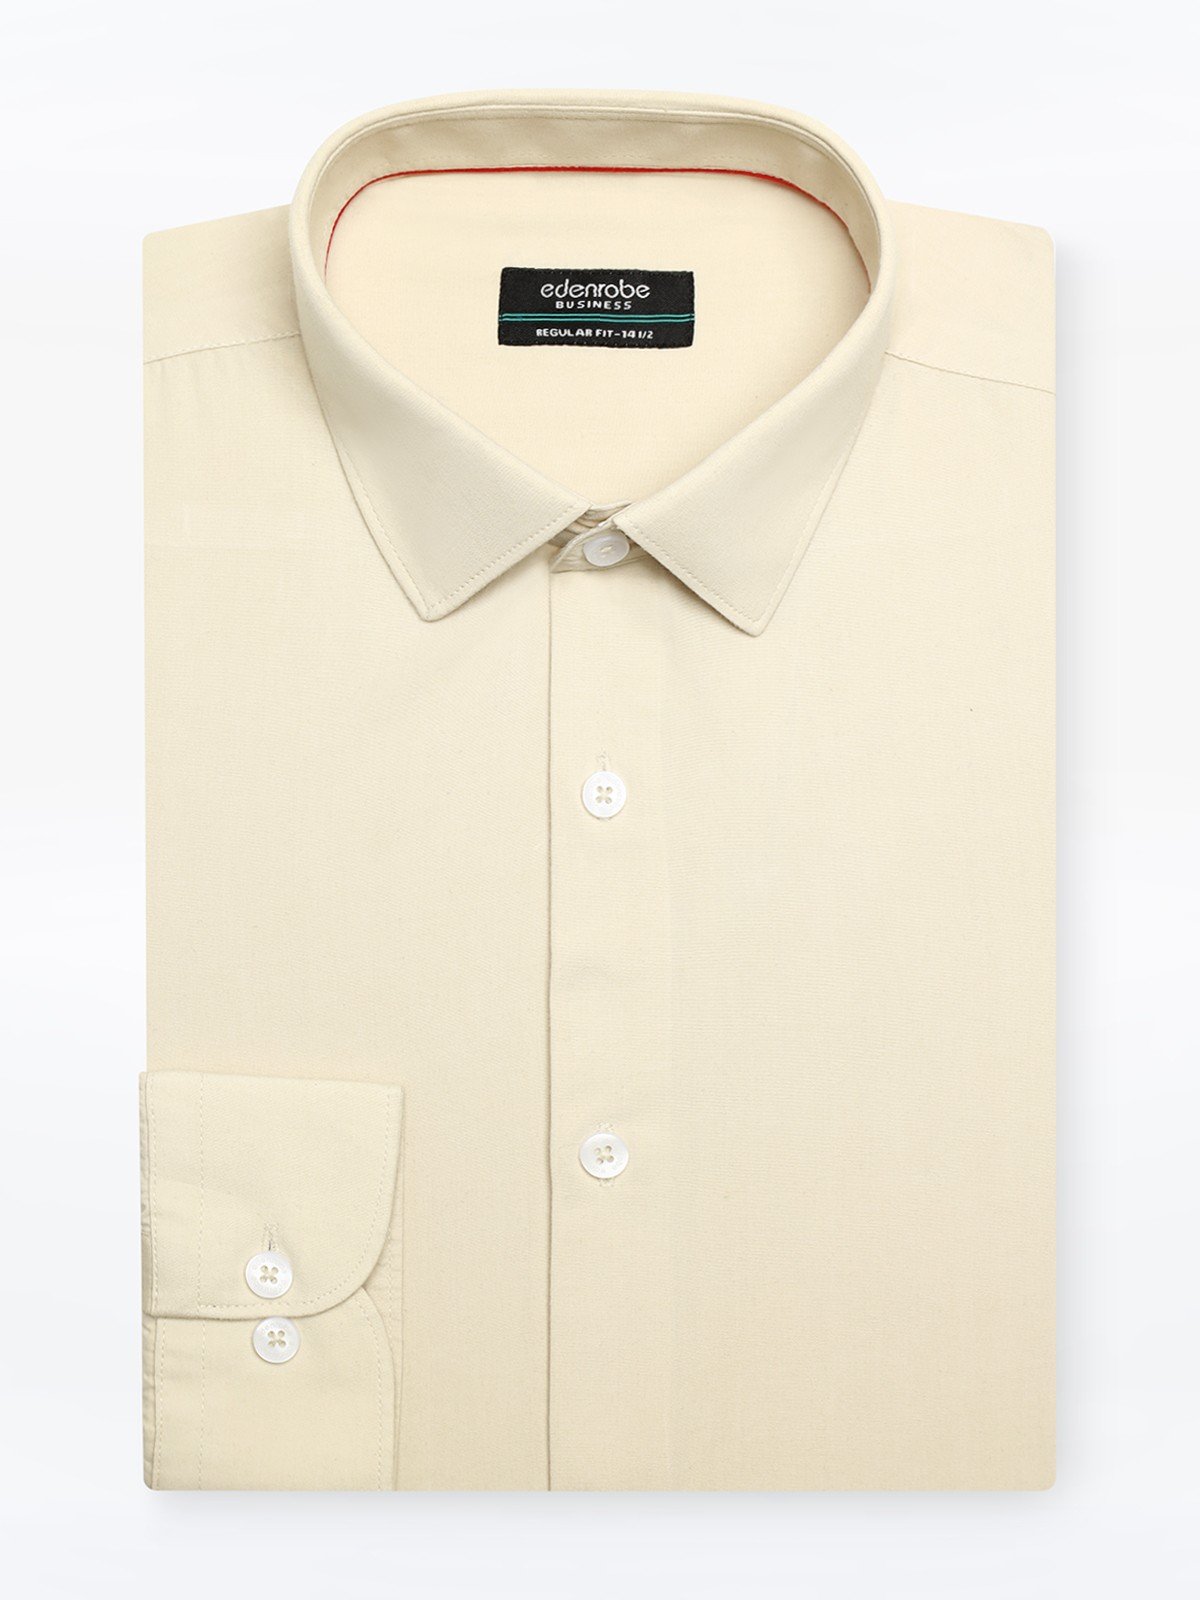 Men's Cream Shirt Plain - EMTSB22-133